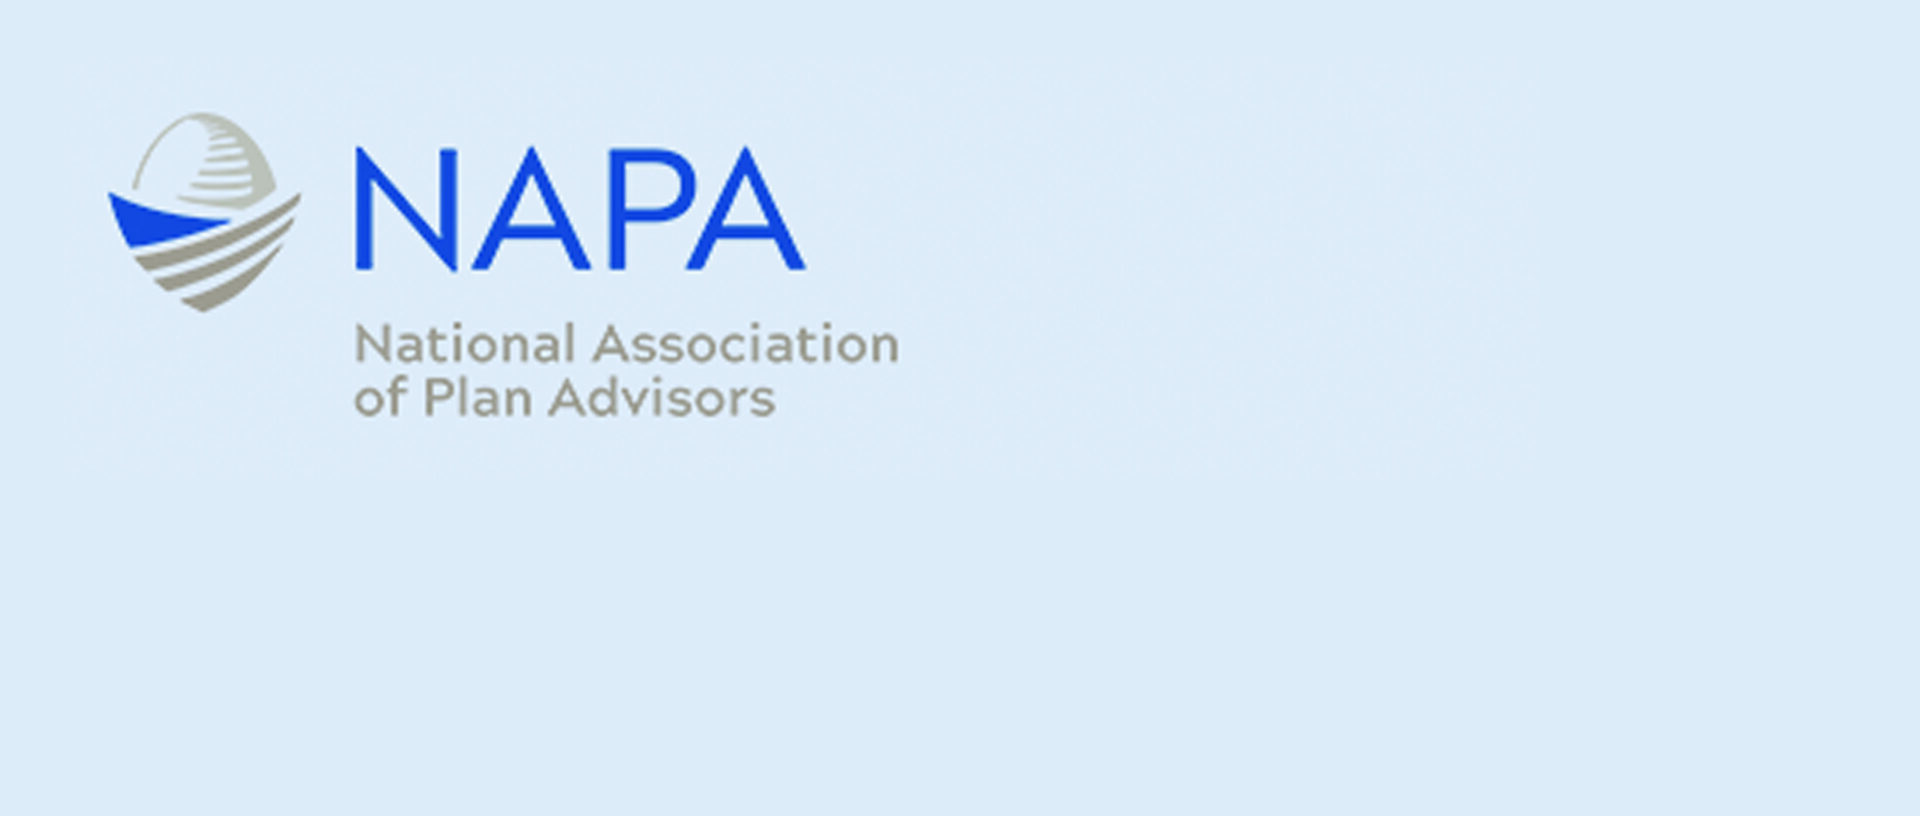 NAPA Names Tony McCracken to “Aces” List of Top Retirement Plan Advisors